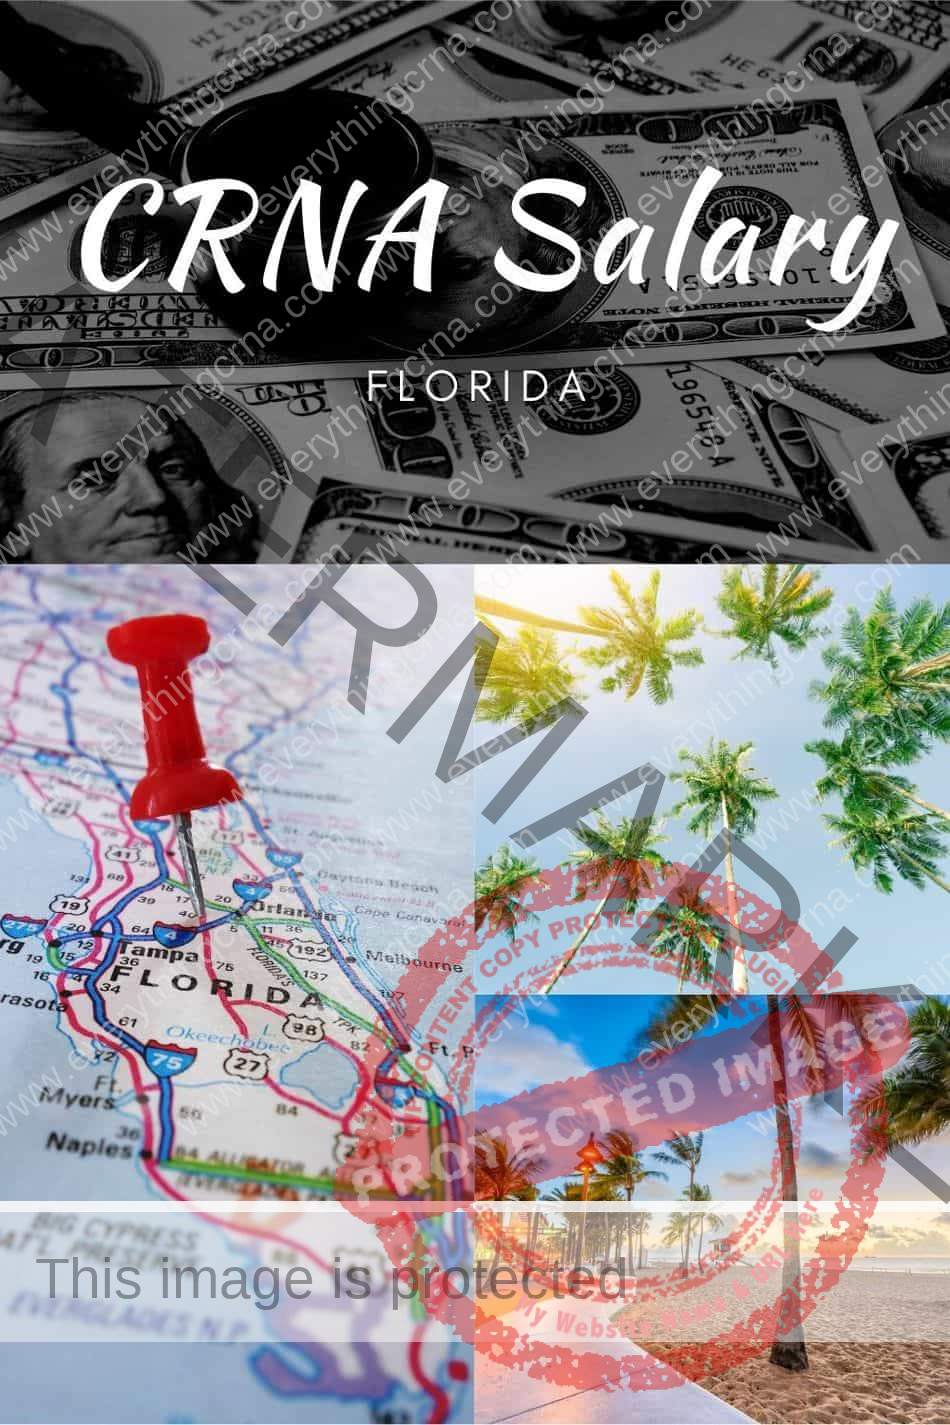 CRNA Salary in Florida